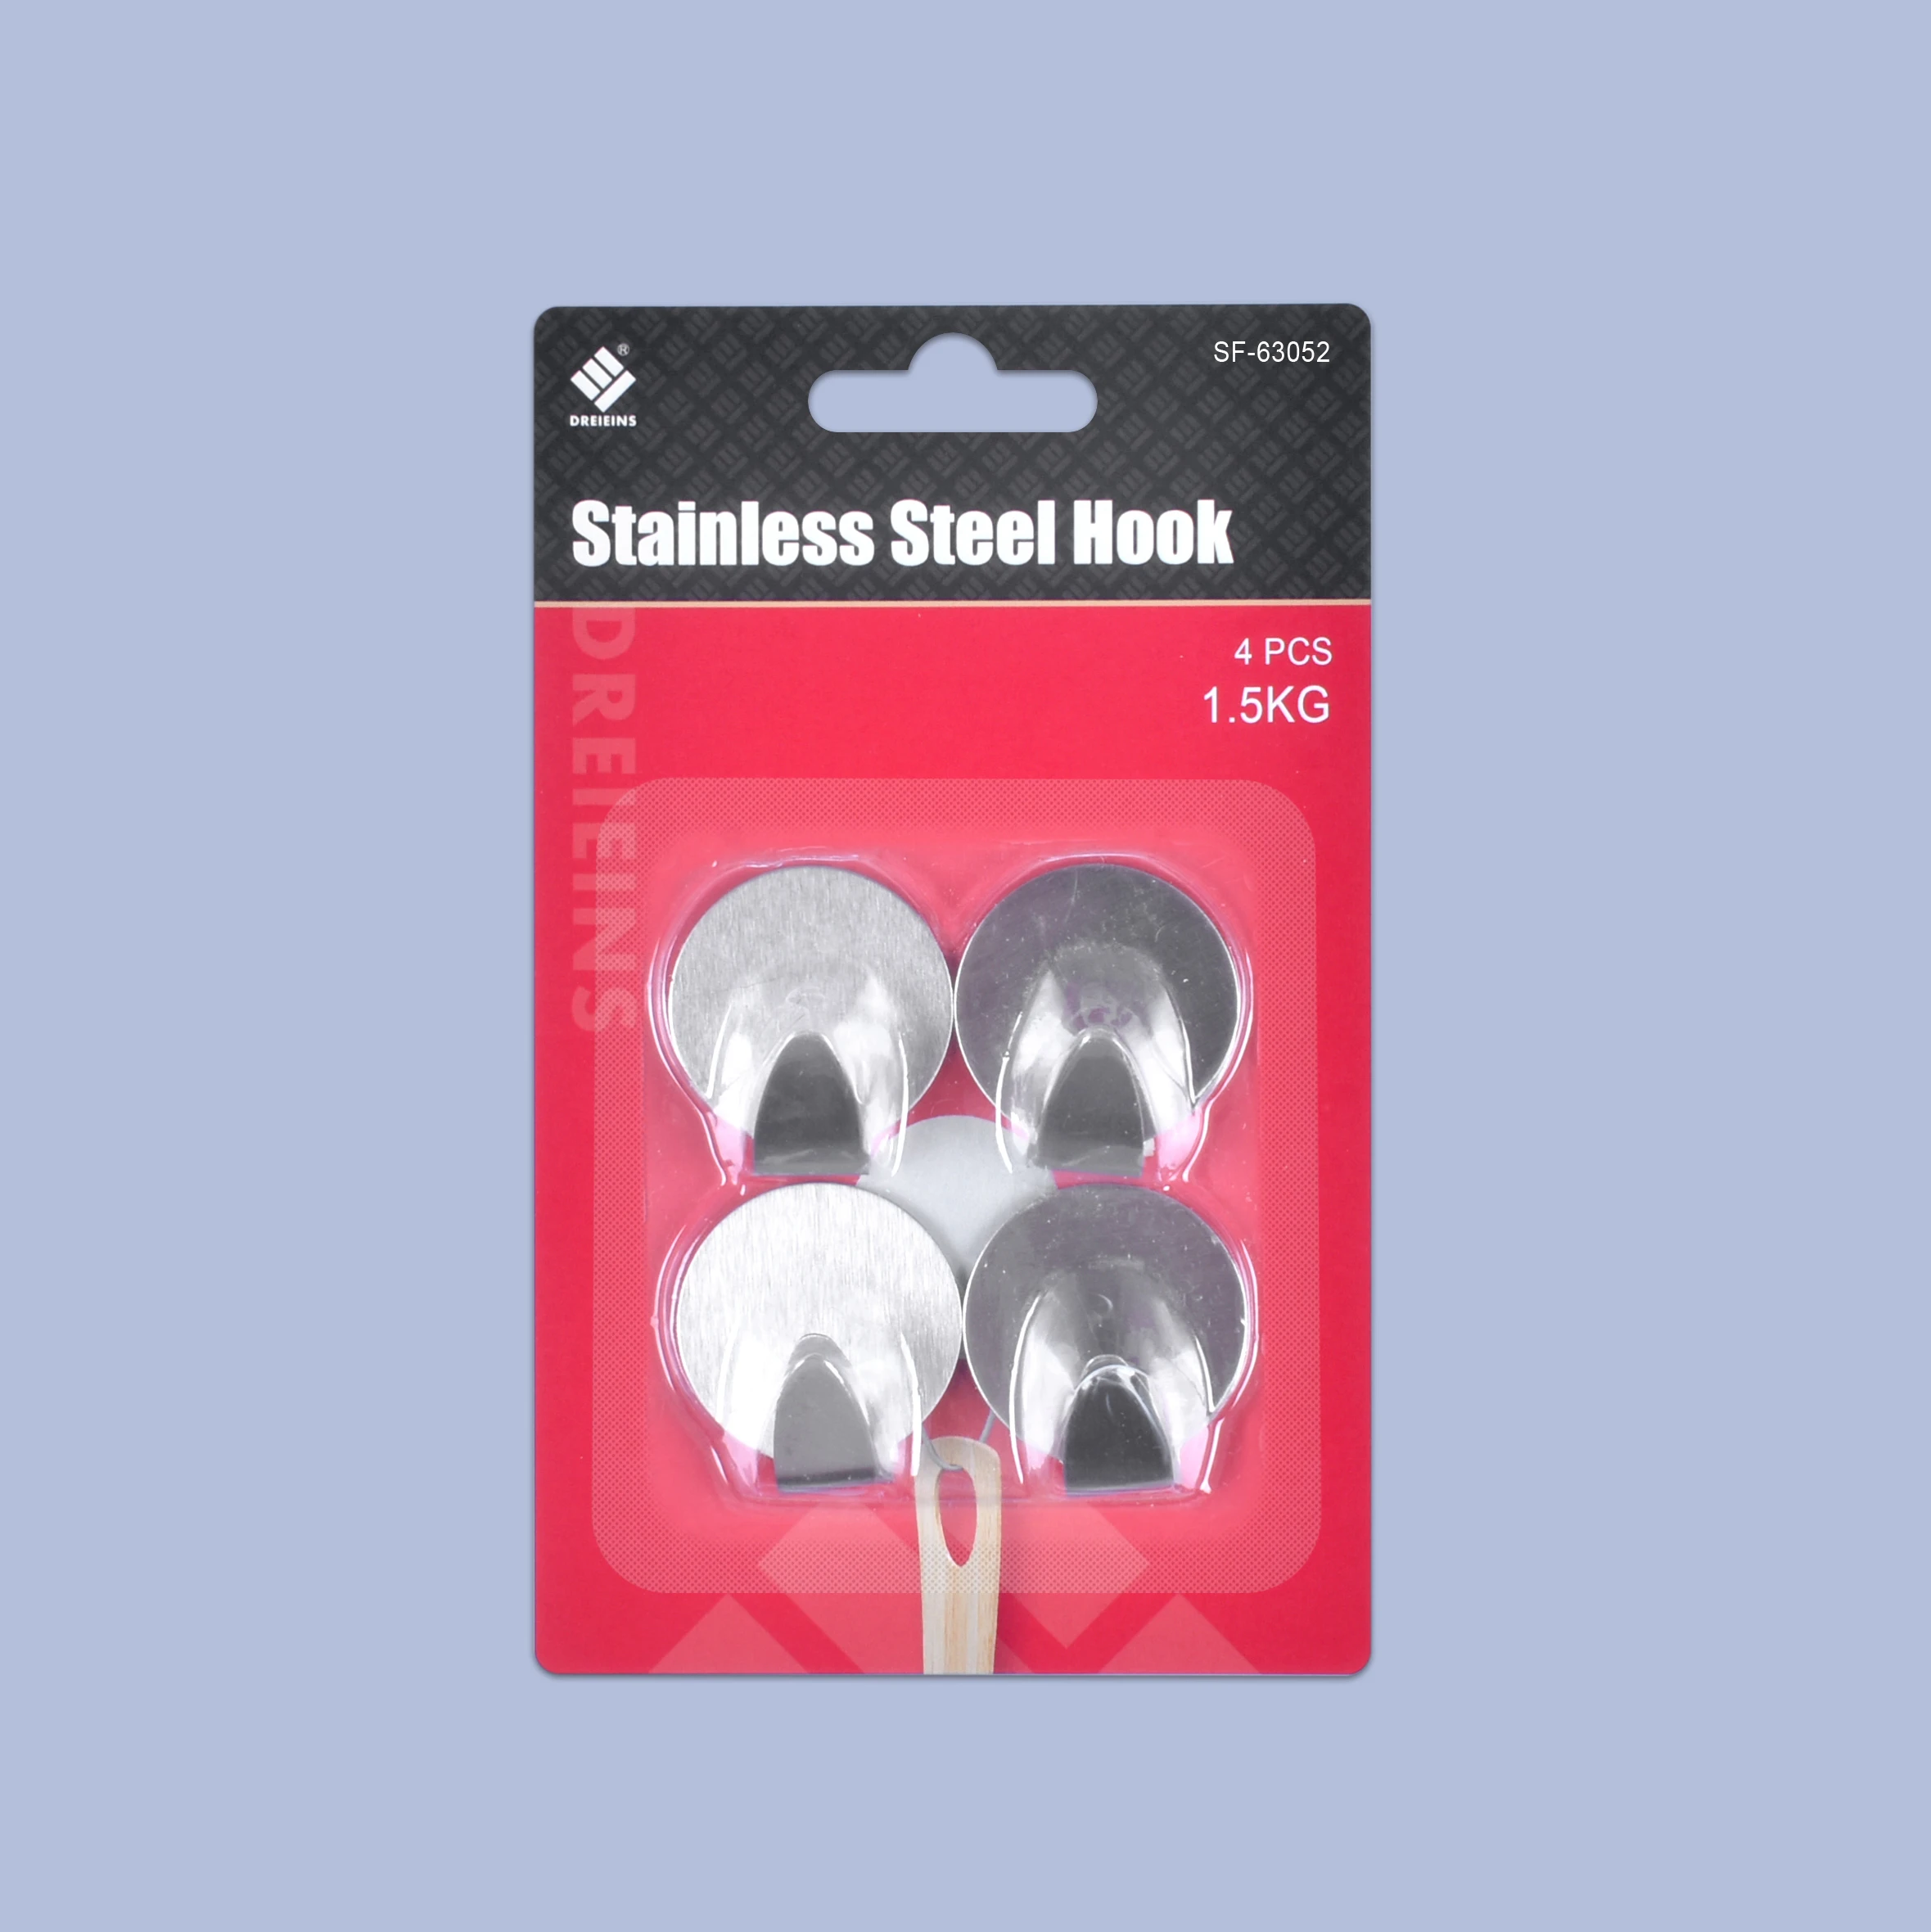 Shanfeng 1.5kg Stainless Steel Hanging Metal Adhesive Hook (62564064308)